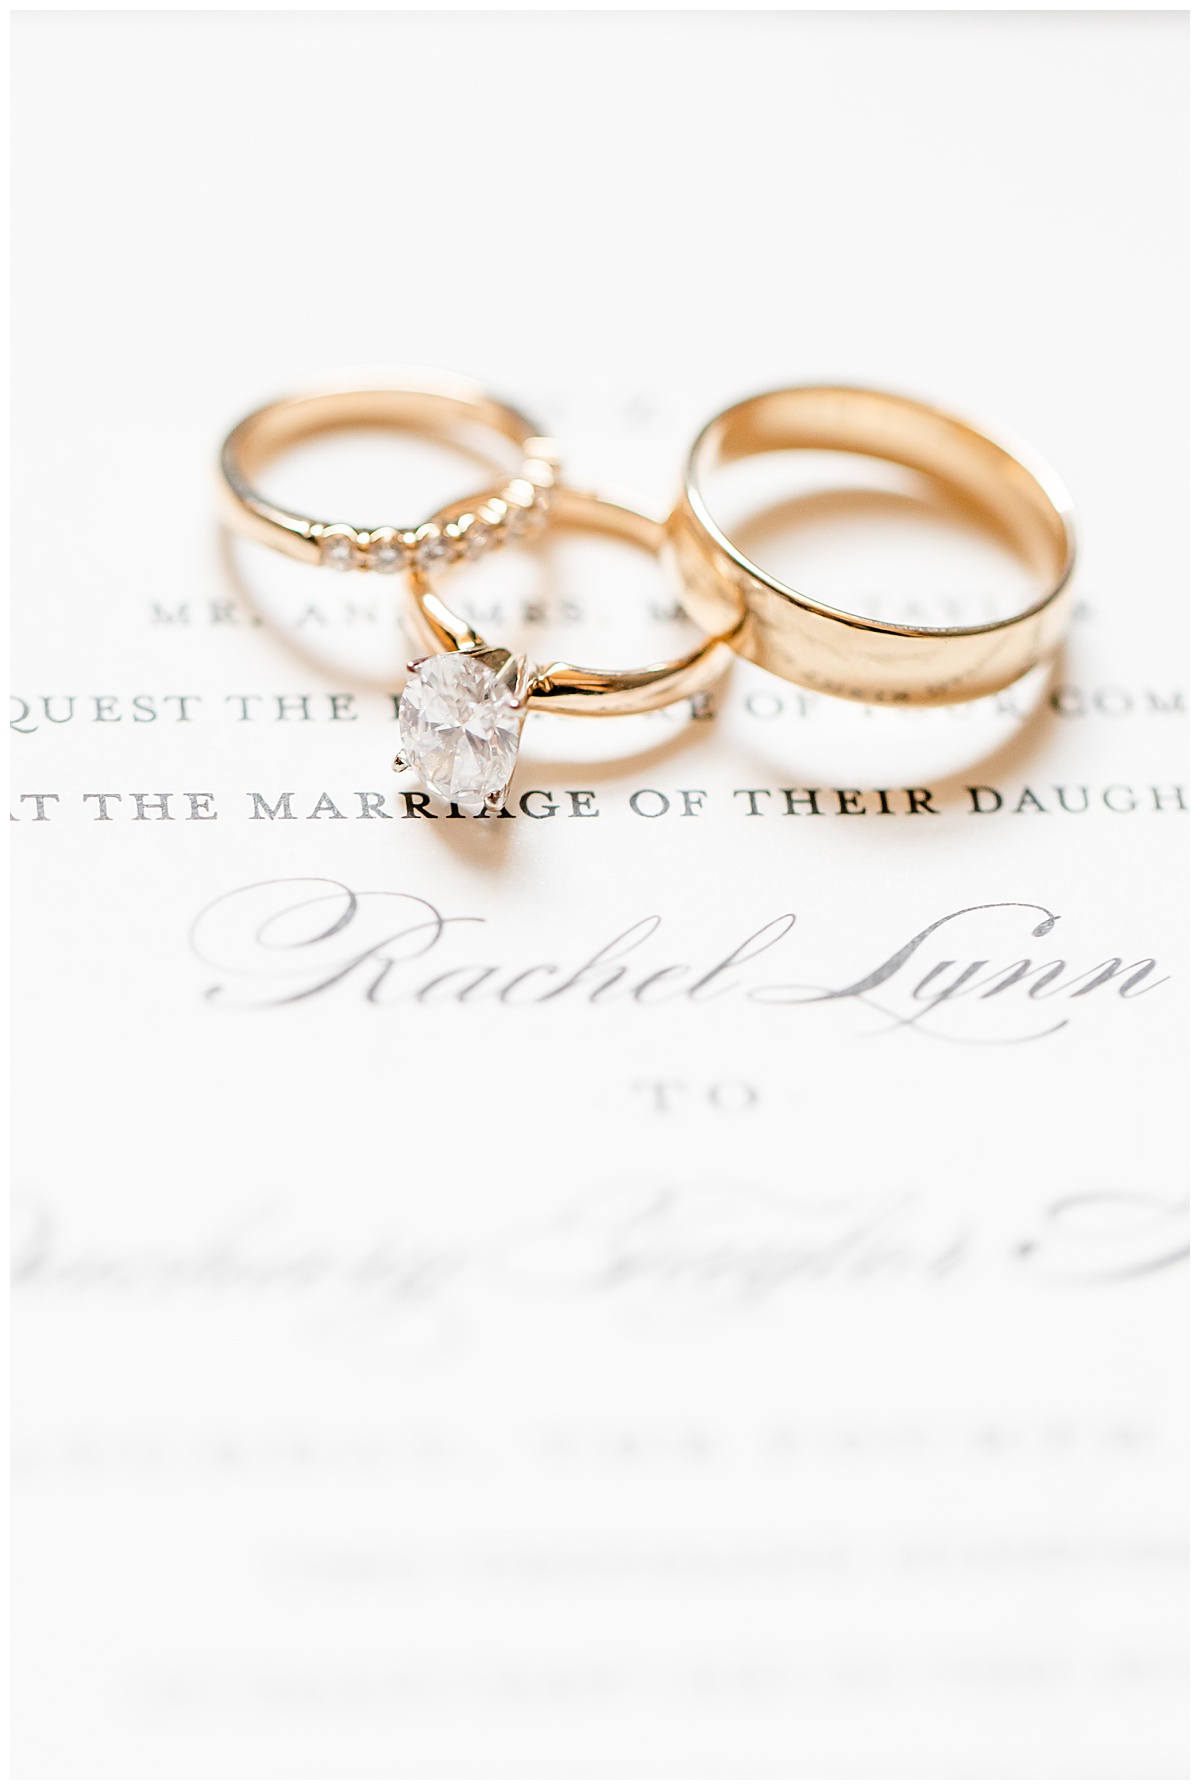 gold wedding rings on invitation